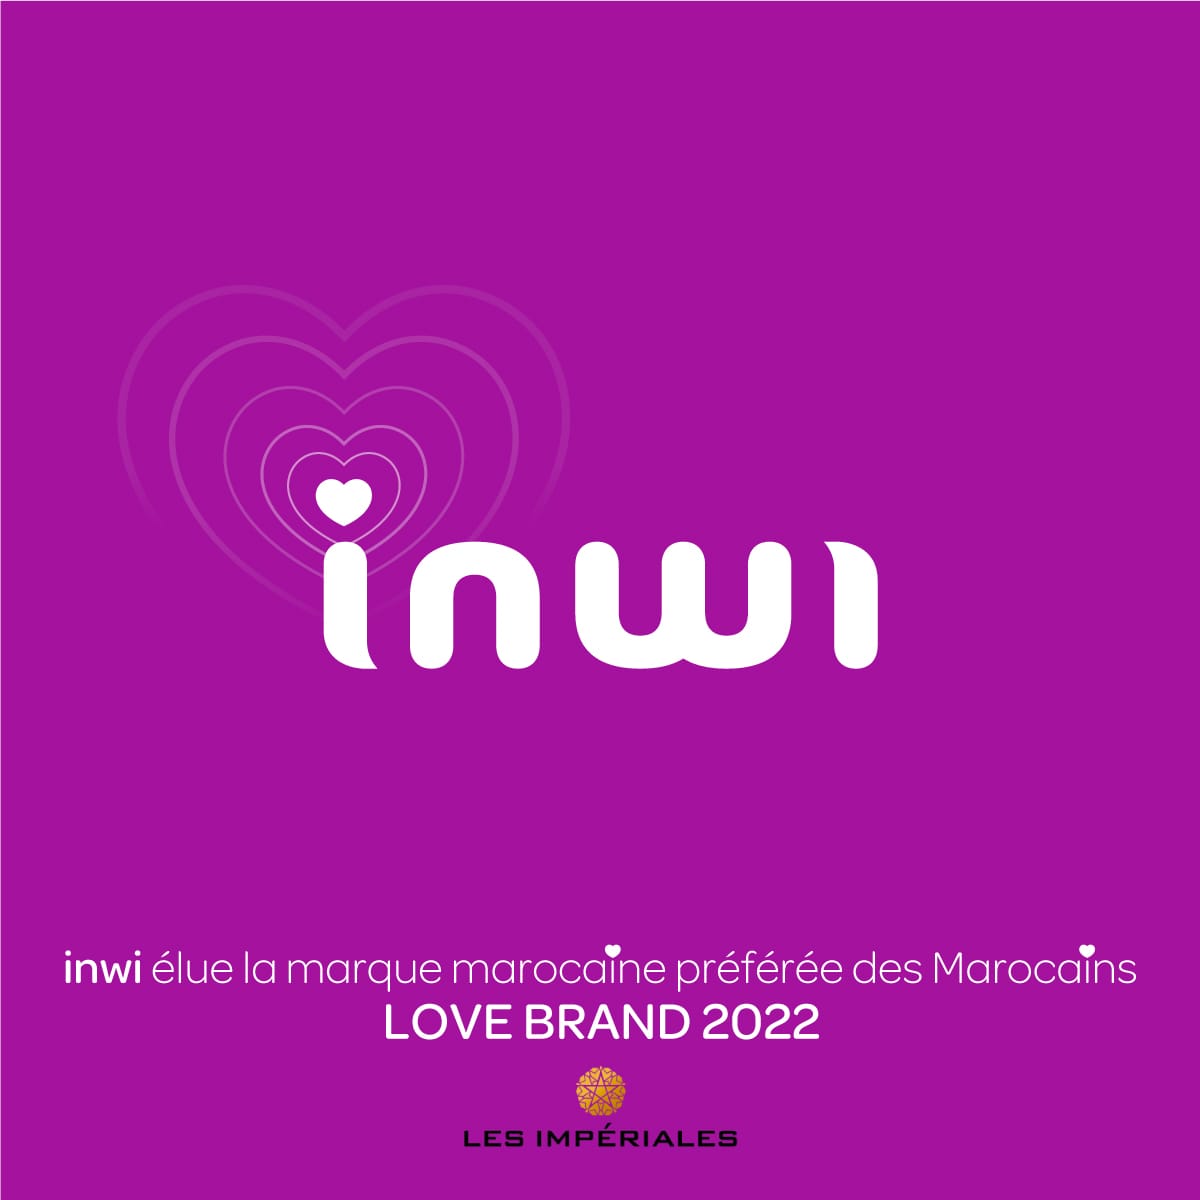 "Love Brand Awards": inwi, la marque la plus aimée au Maroc